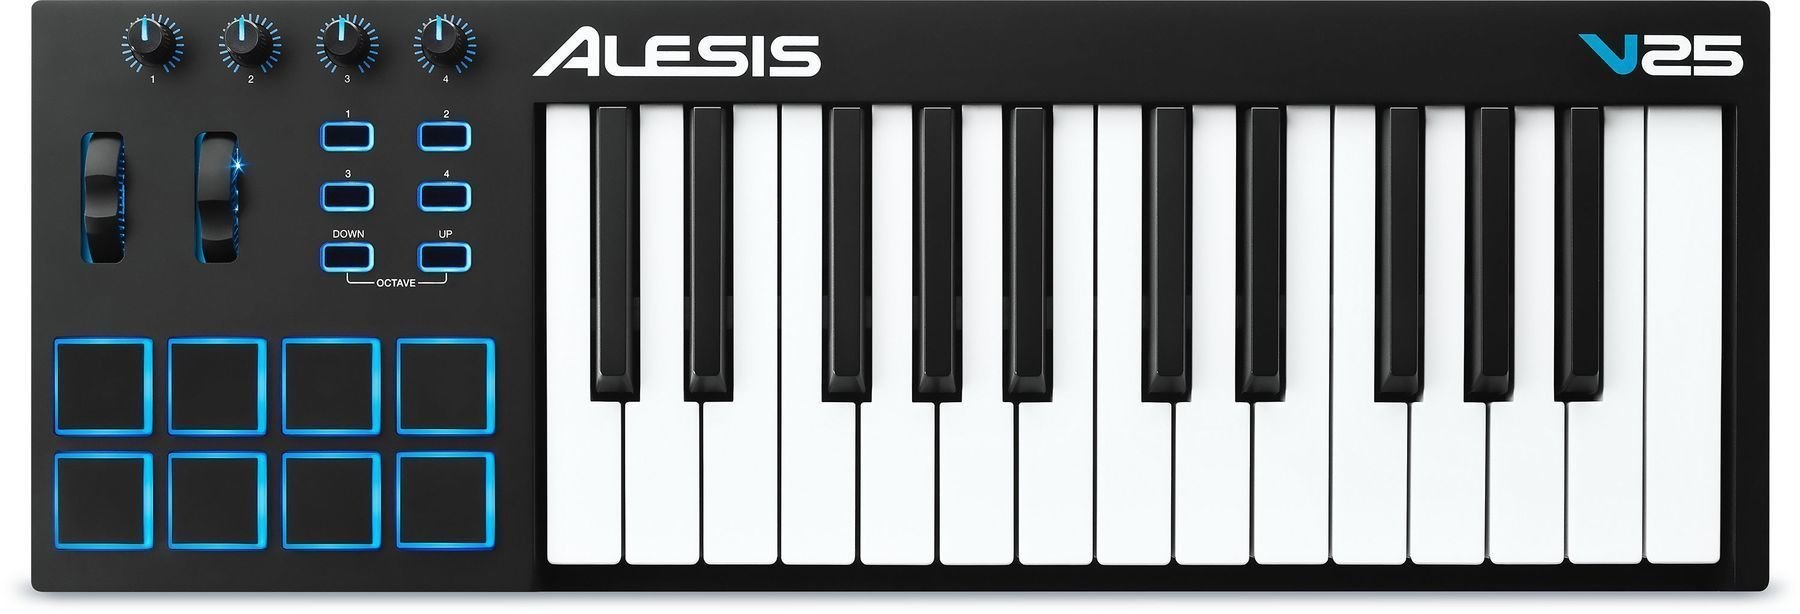 MIDI-Keyboard Alesis V25